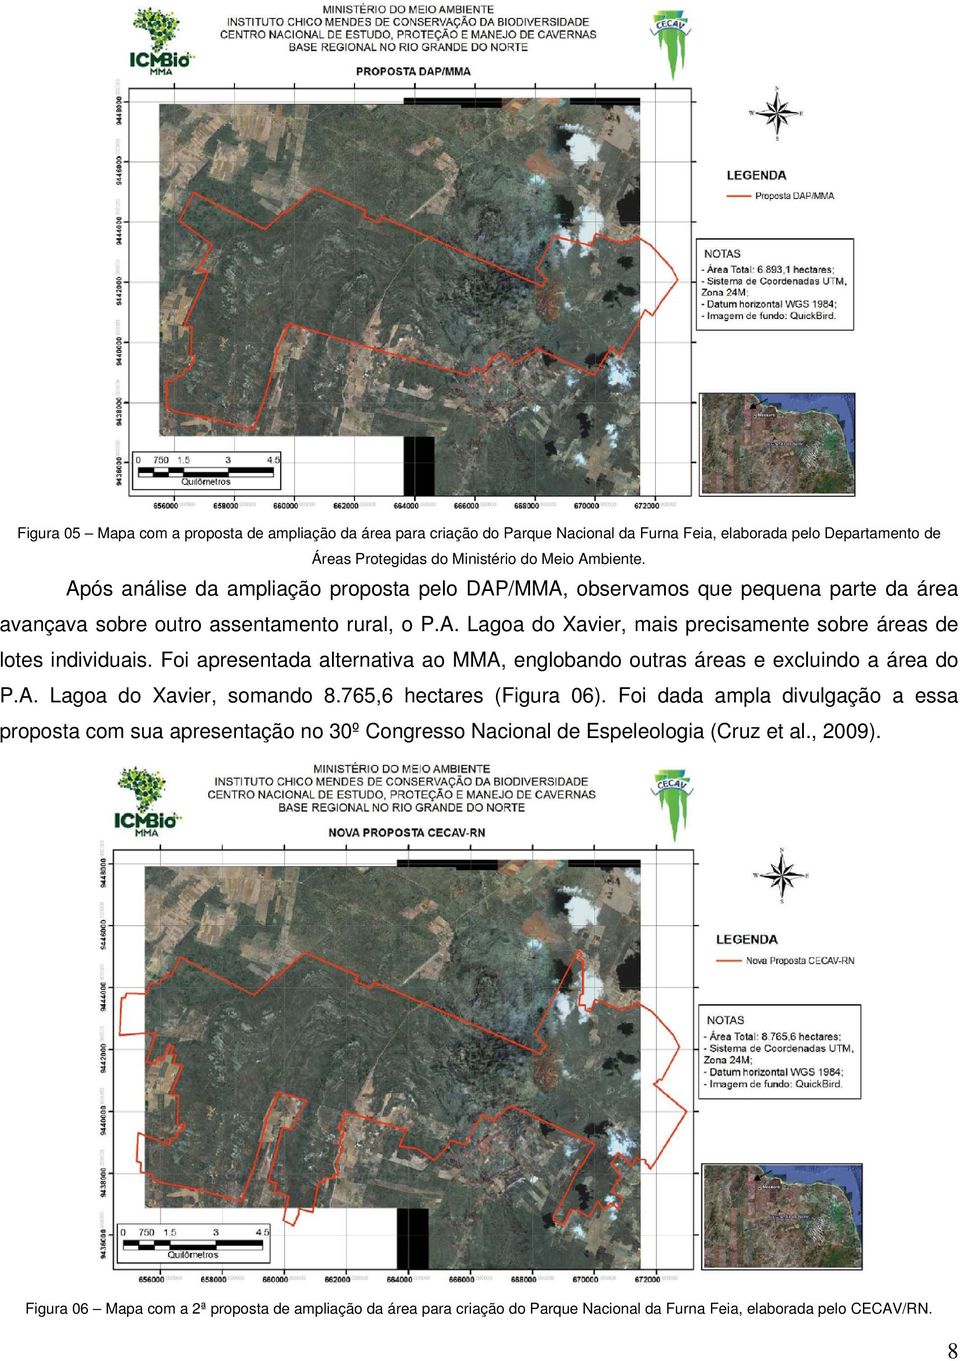 Foi apresentada alternativa ao MMA, englobando outras áreas e excluindo a área do P.A. Lagoa do Xavier, somando 8.765,6 hectares (Figura 06).